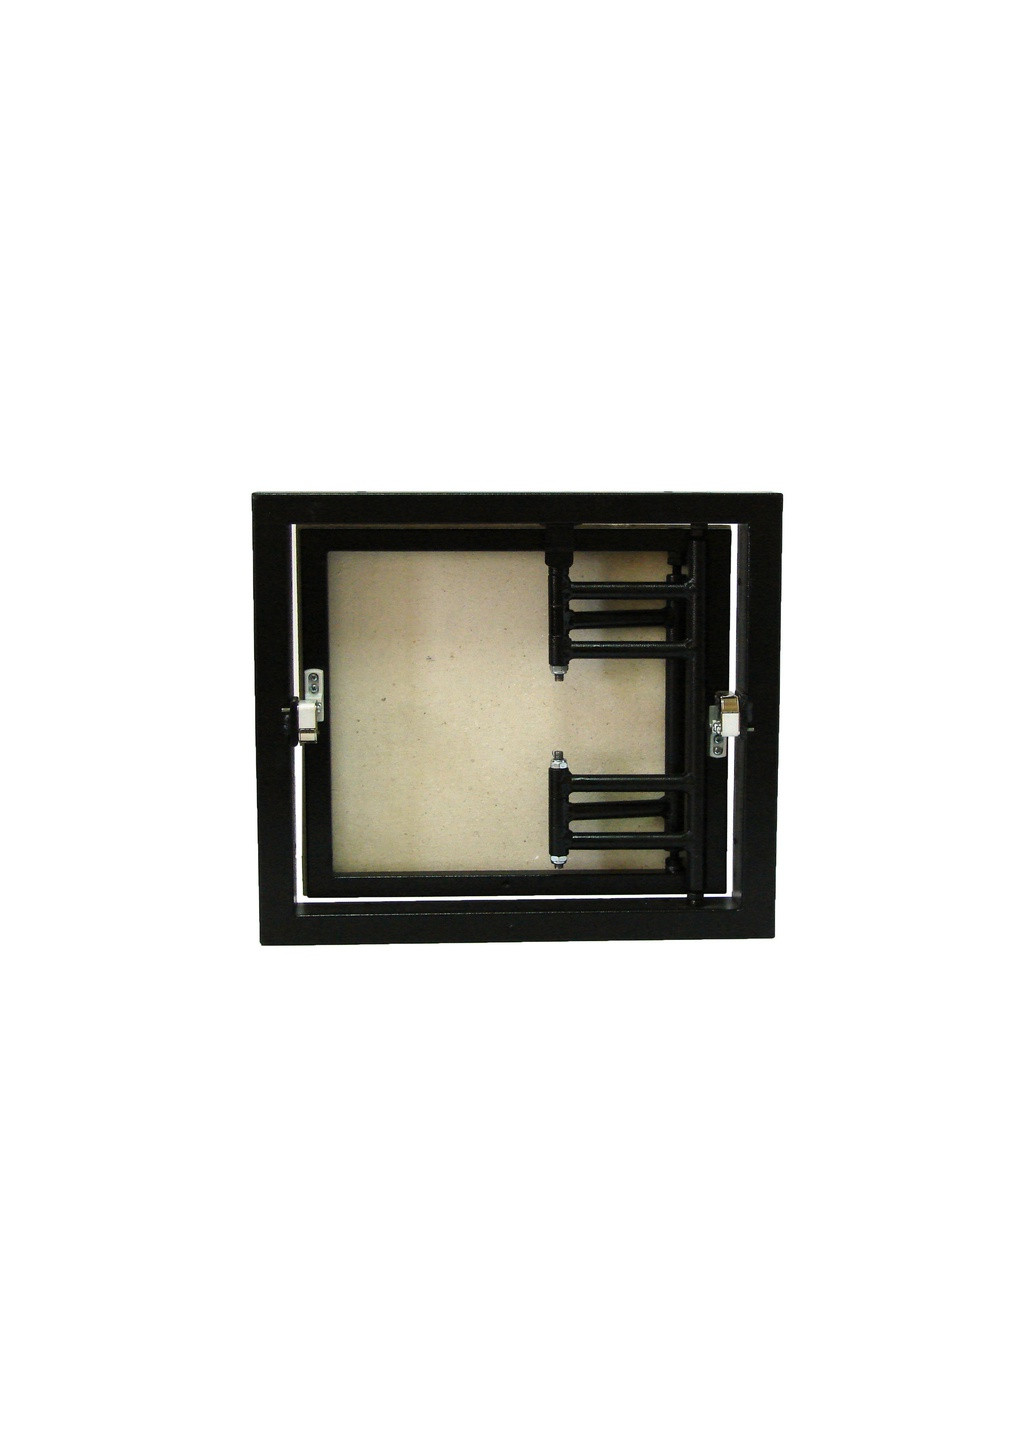 Ревизионный люк скрытого монтажа под плитку нажимного типа 350x300 ревизионная дверца для плитки (1137) S-Dom (295038628)